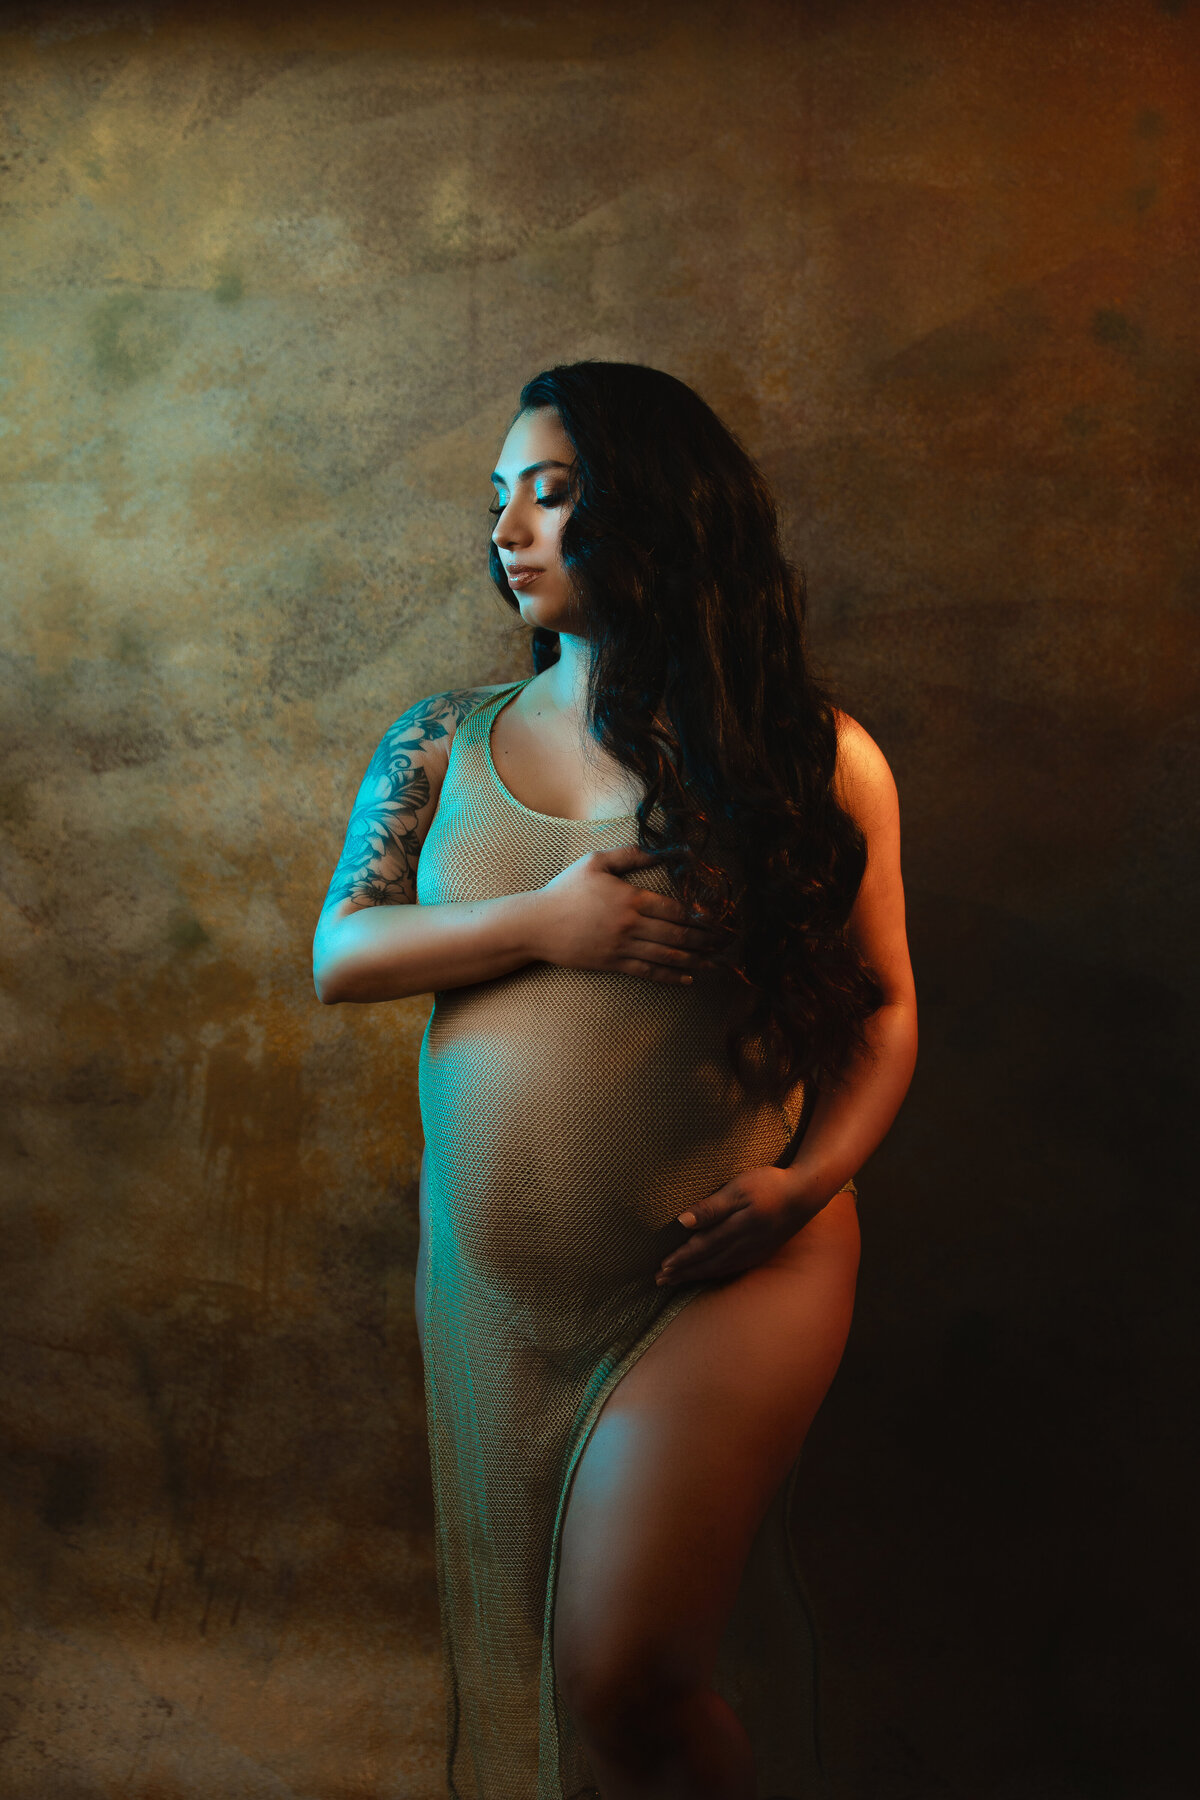 Studio maternity photos in Central Texas